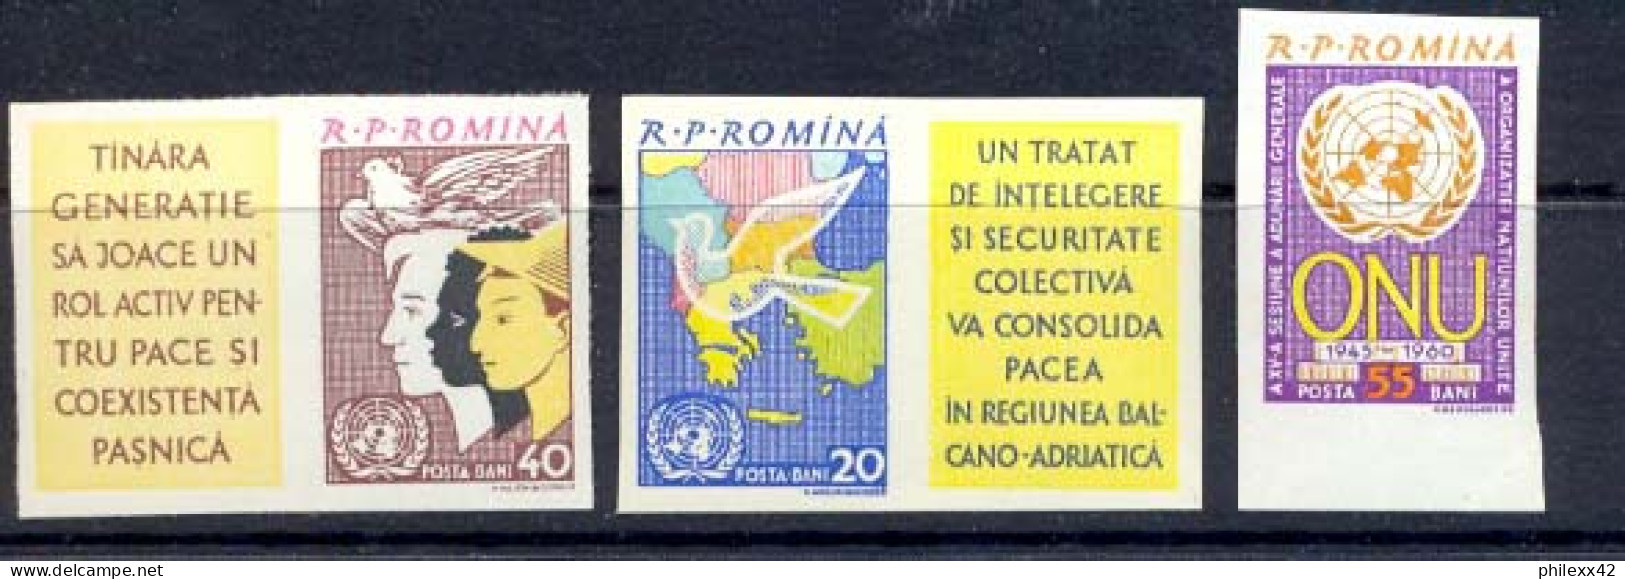 Roumanie (Romania) MNH ** -82 N° 1815 /17 ONU Nations Unies (uno - United Nations) Non Dentelé Imperf - Ongebruikt